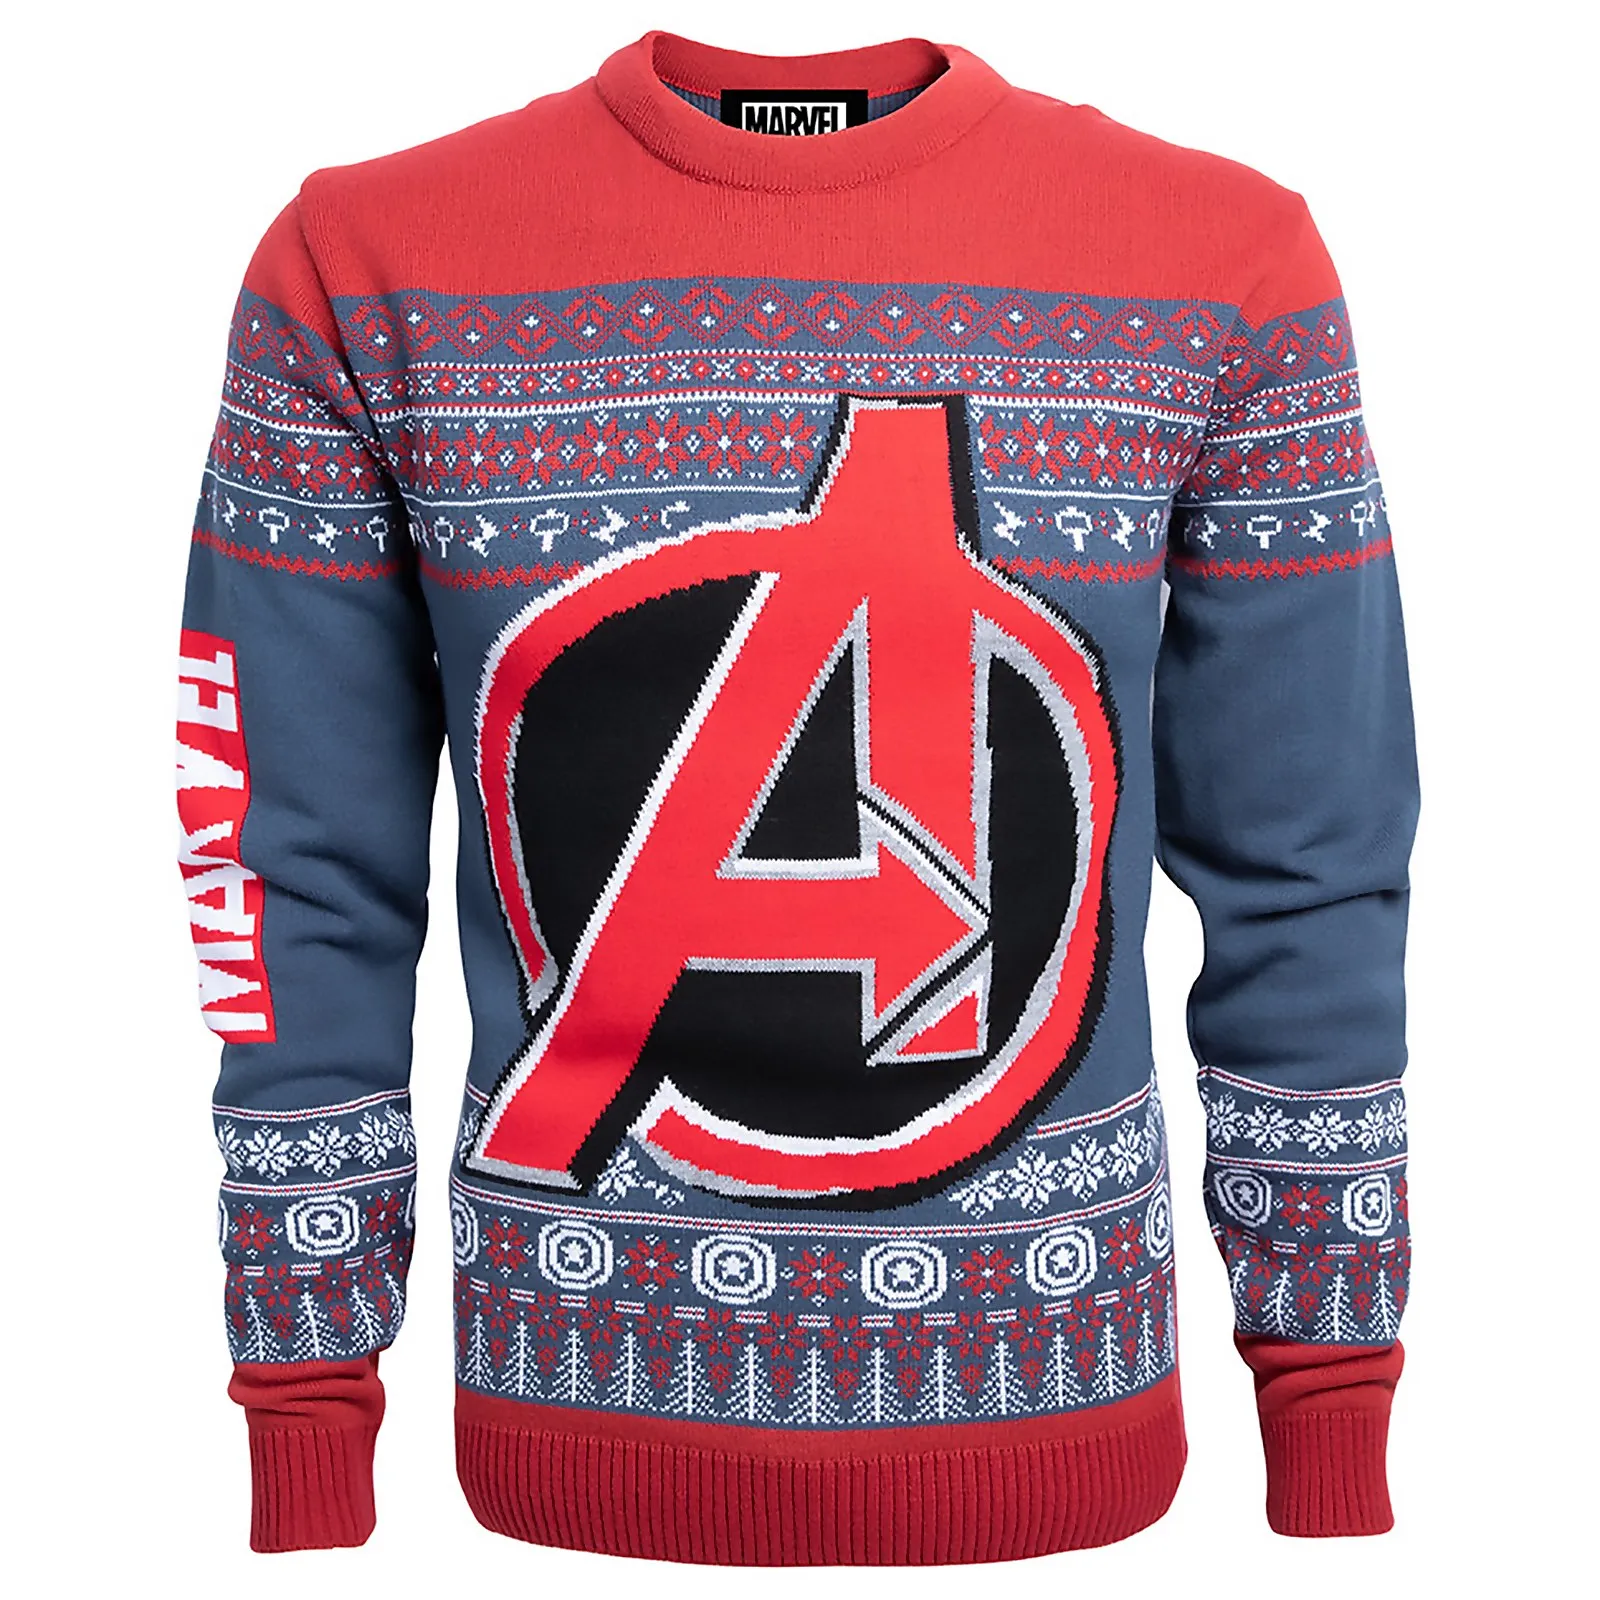  Avengers Christmas Knitted Jumper - Navy - XXL